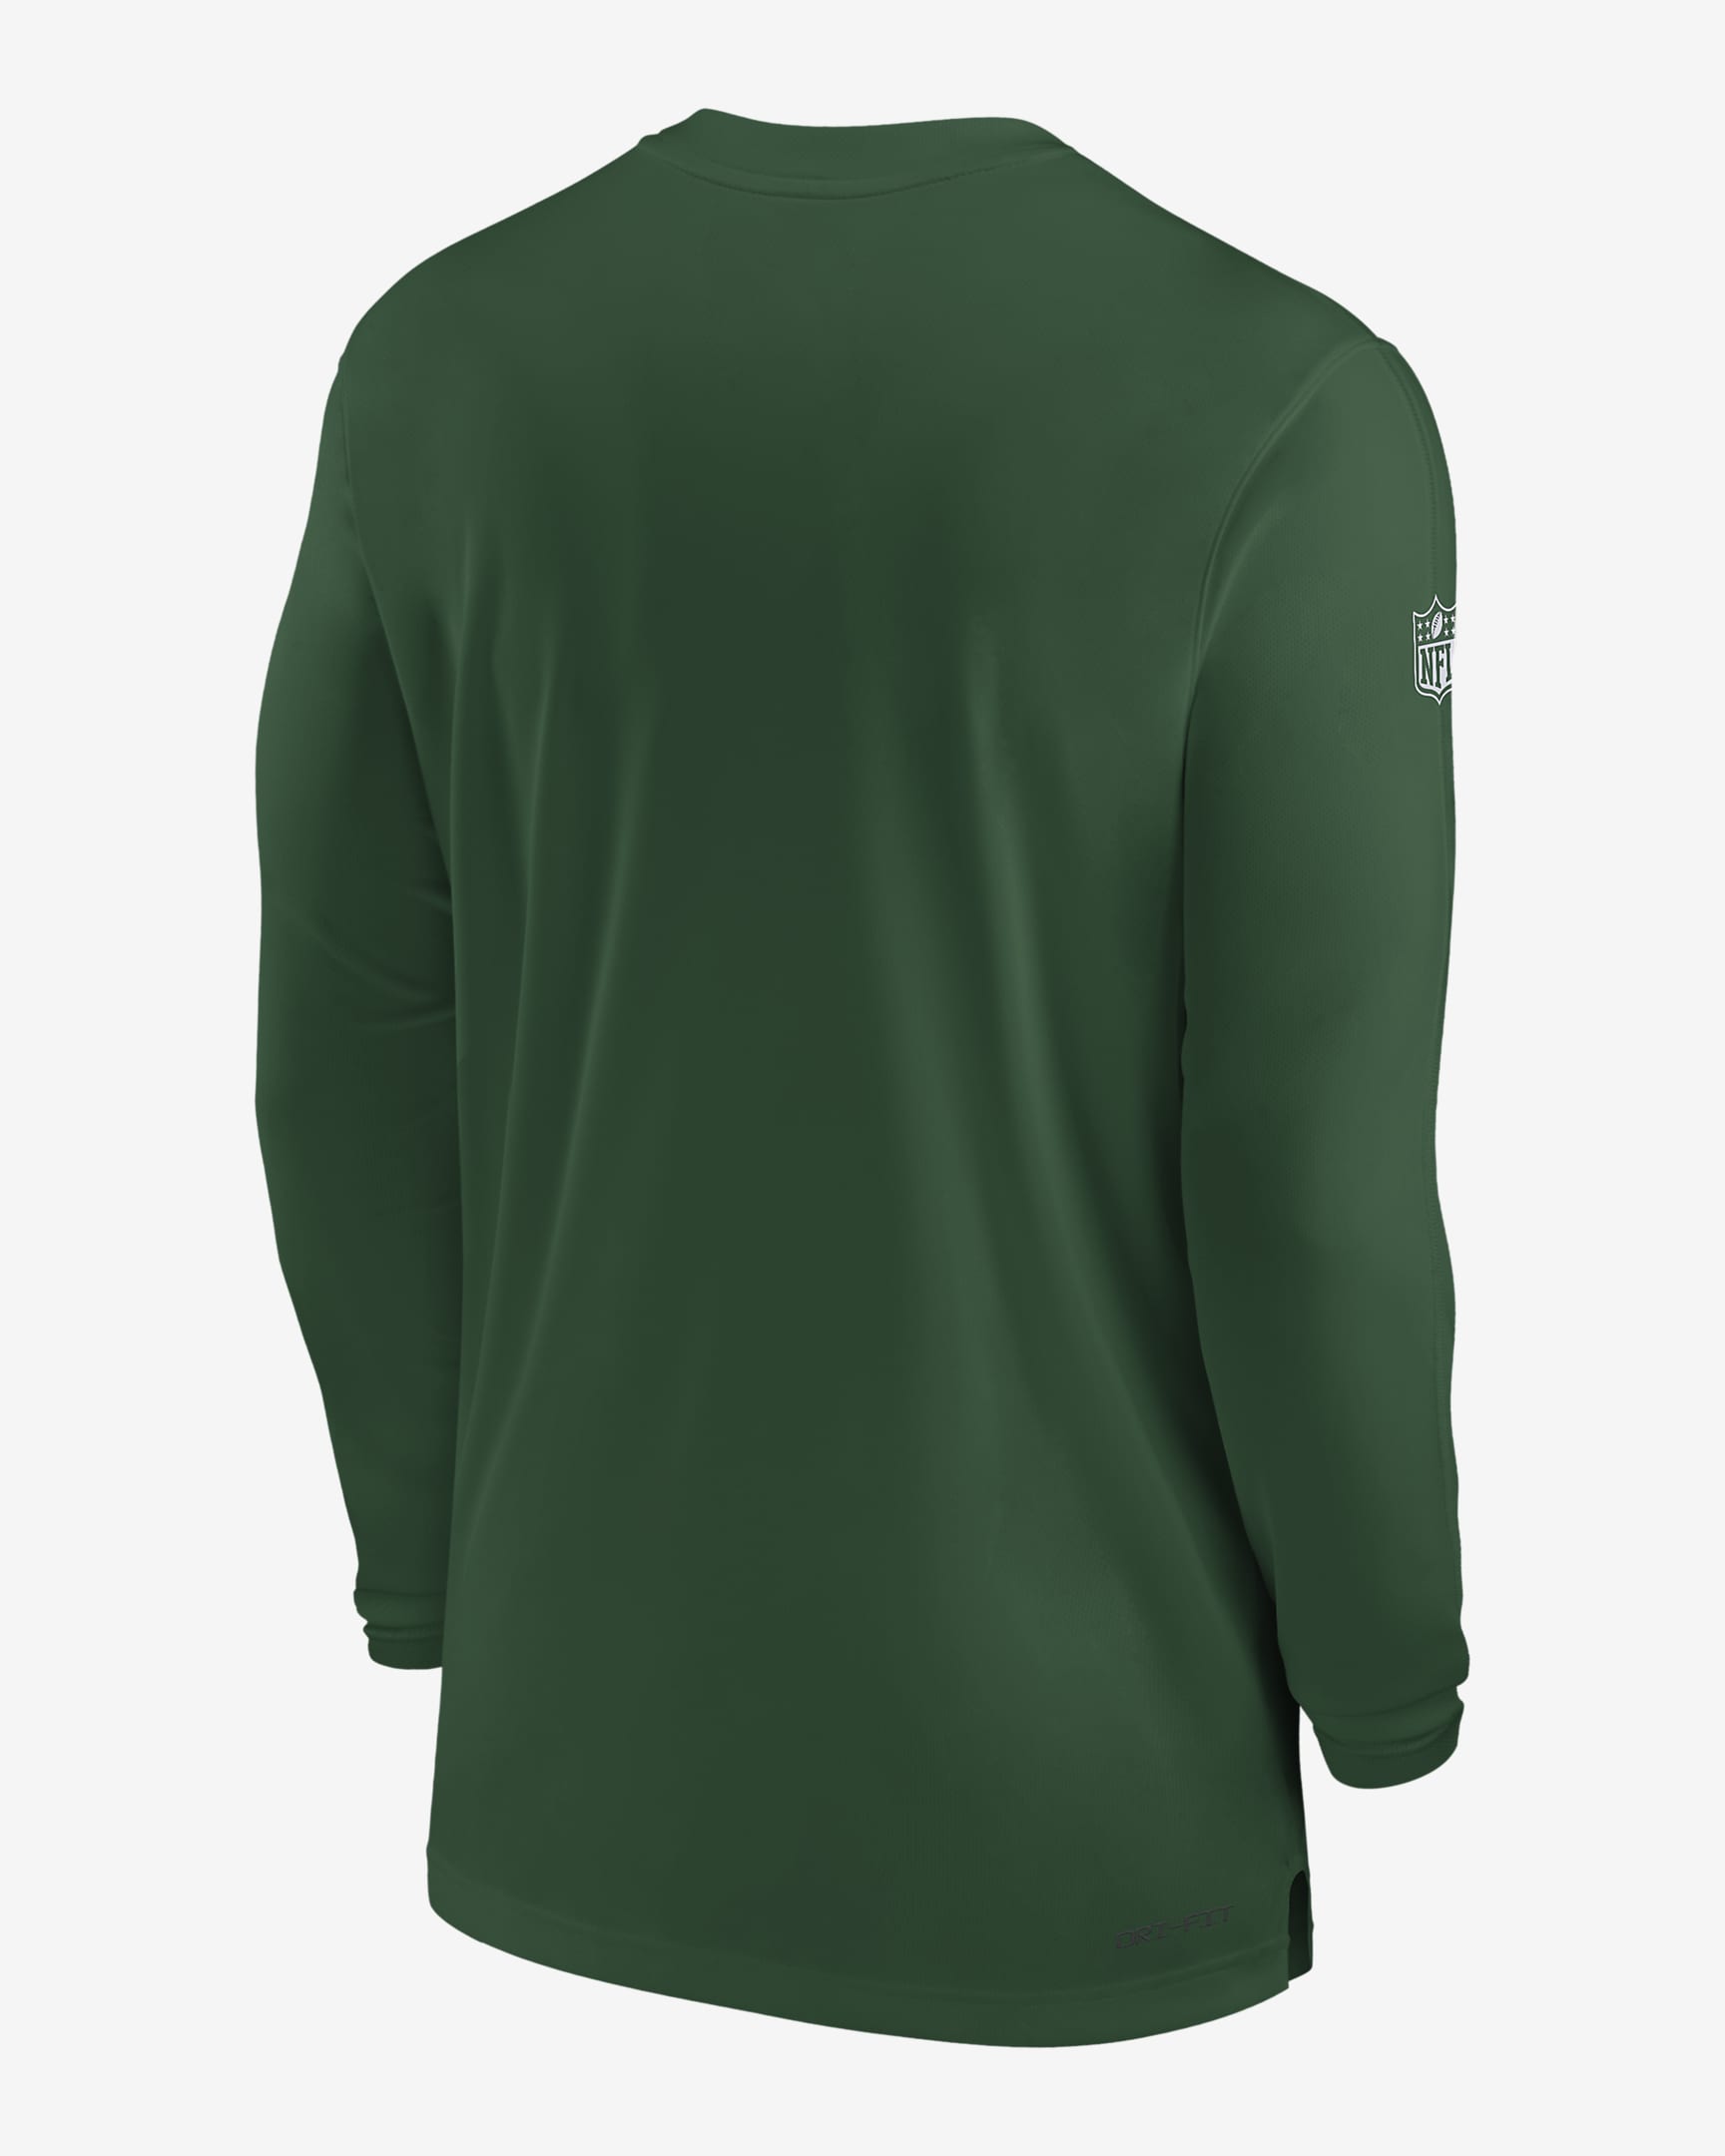 Nike Dri-FIT Sideline Coach (NFL New York Jets) Men's Long-Sleeve Top ...